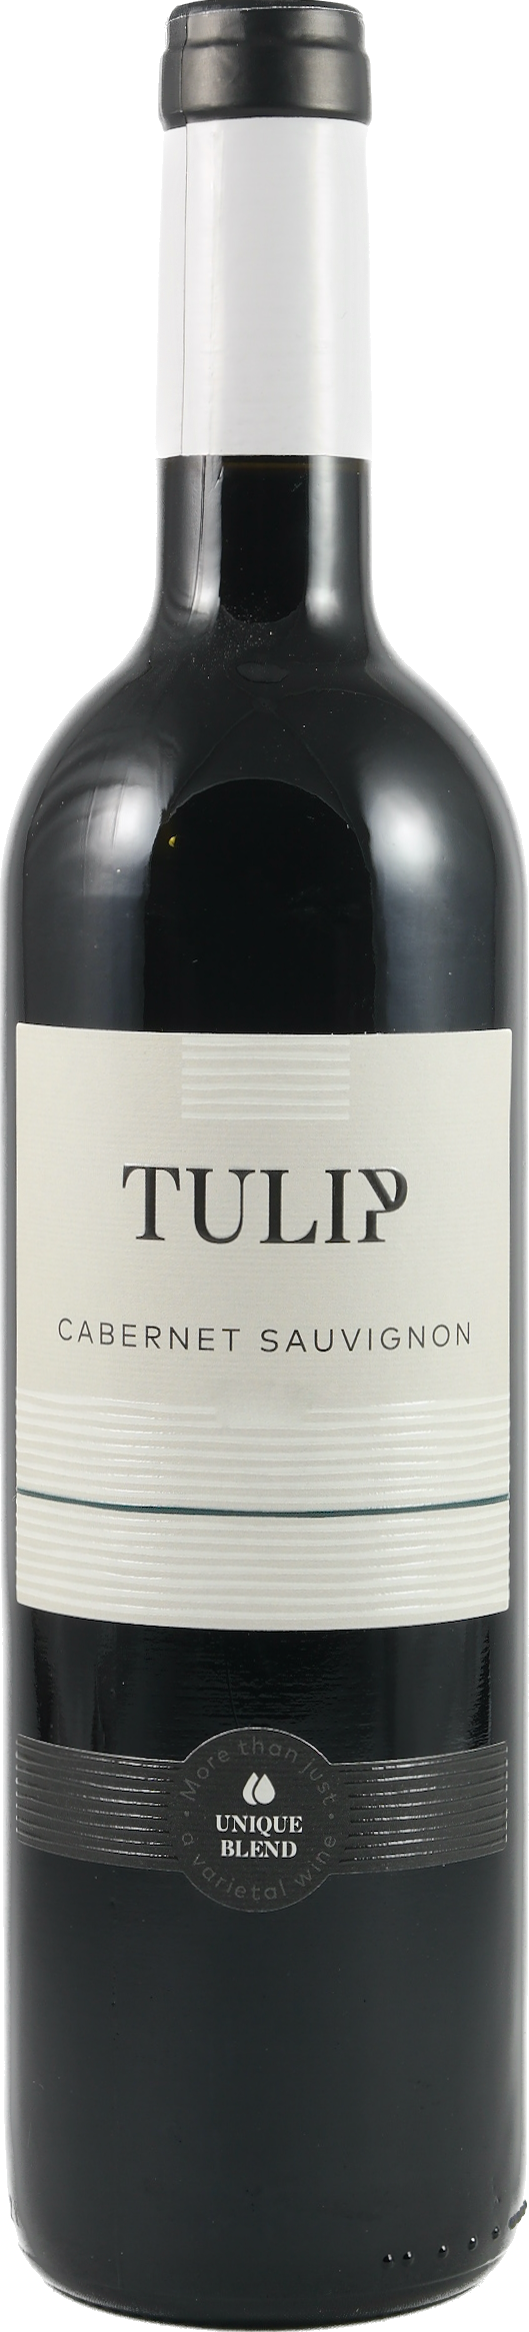 Tulip Cabernet Sauvignon 2020